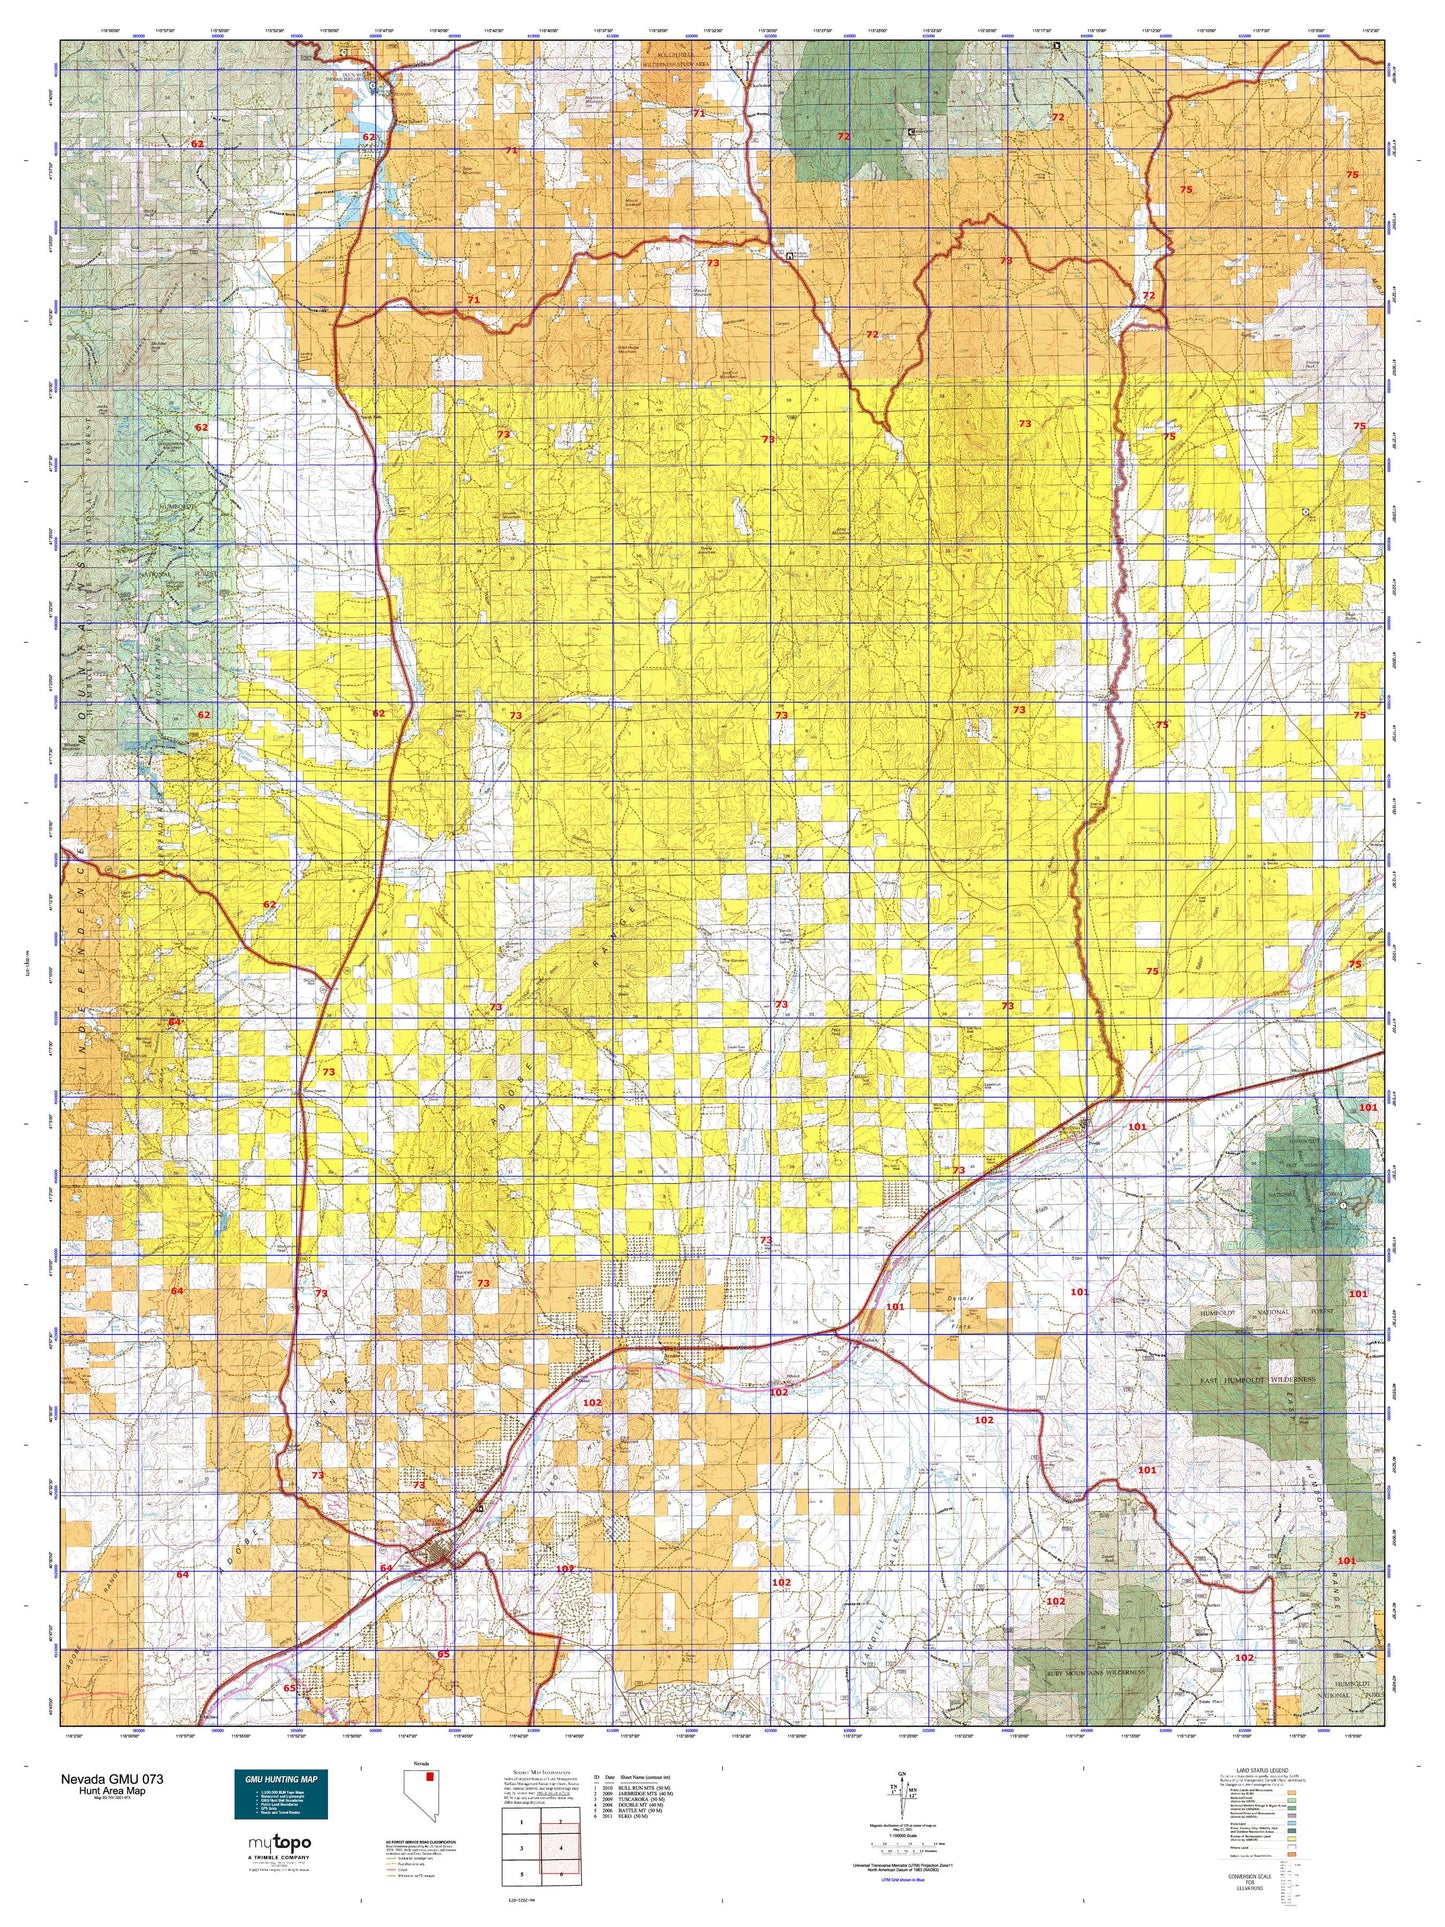 Nevada GMU 073 Map Image